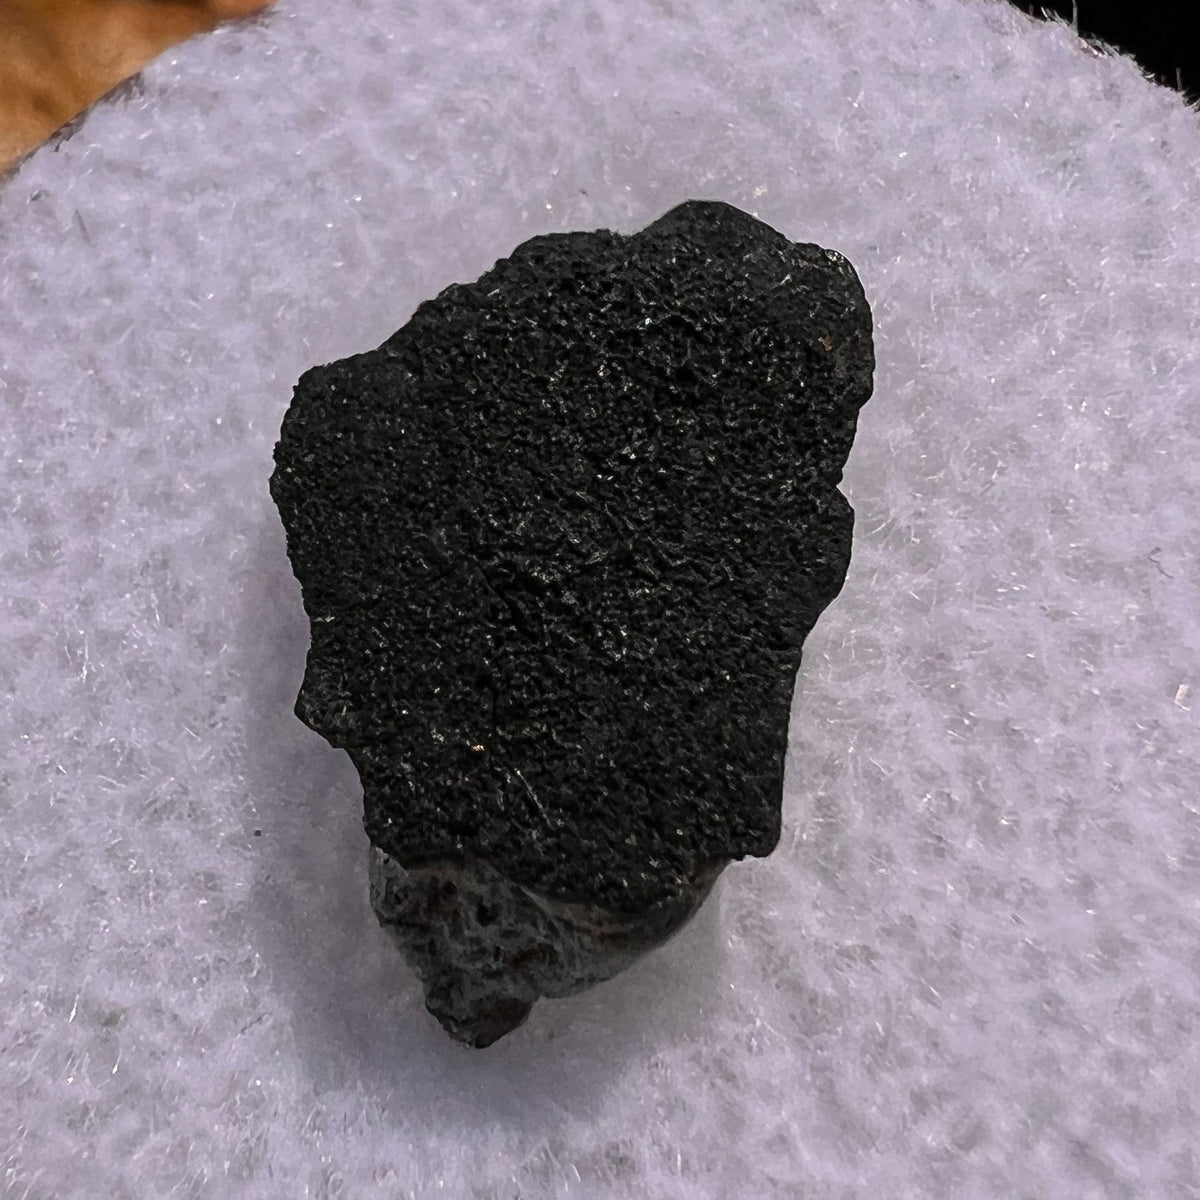 Chelyabinsk Meteorite Superbolide Asteroid 0.6 grams #77-Moldavite Life